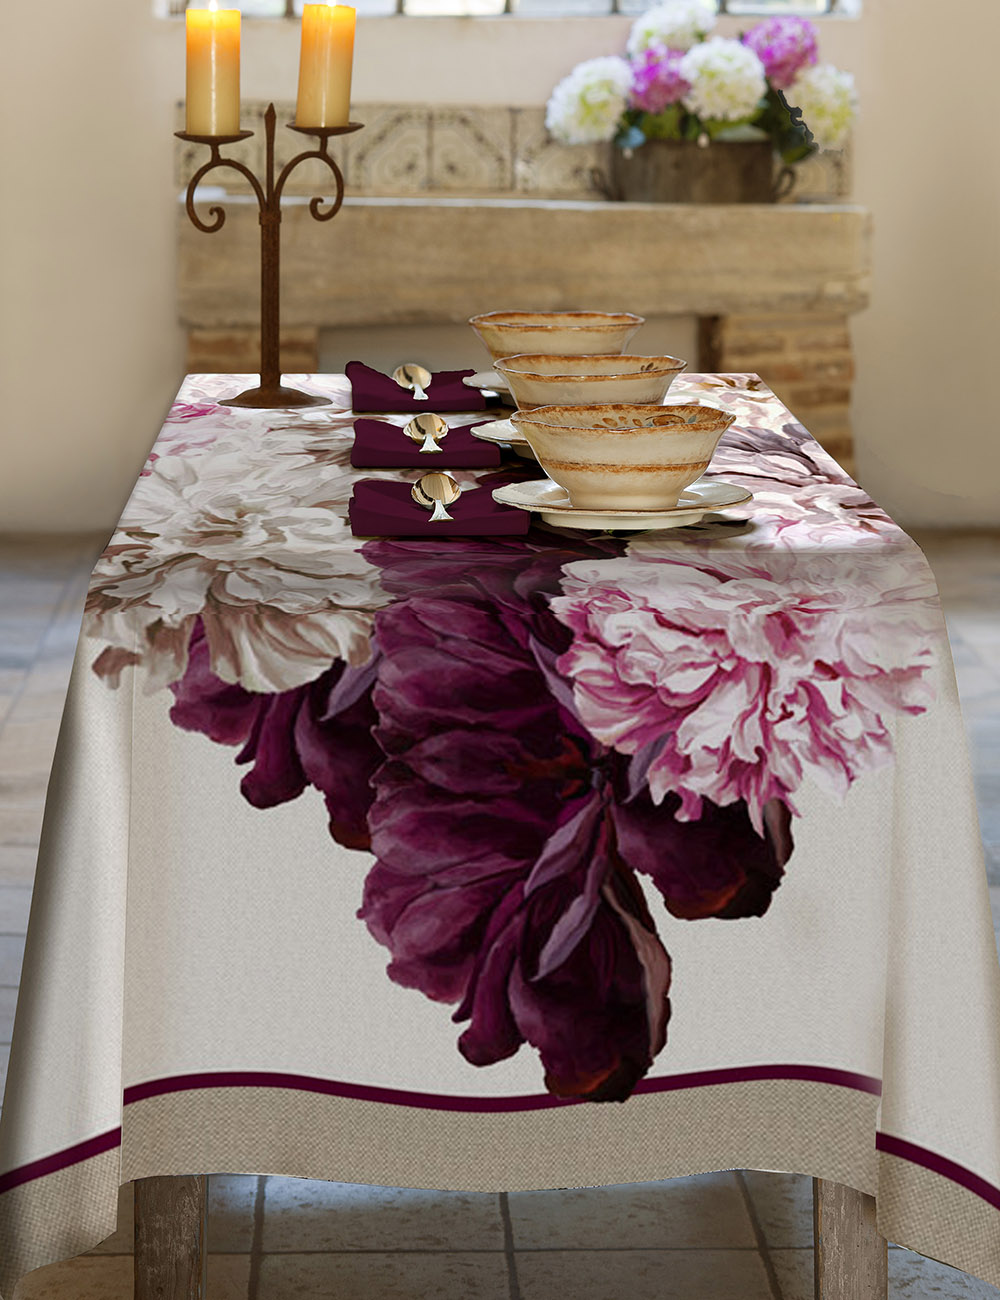 Tovaglia da tavola rettangolare 12 posti bianca stampa fiori amaranto - 12  seater rectangular white tablecloth flowers printed